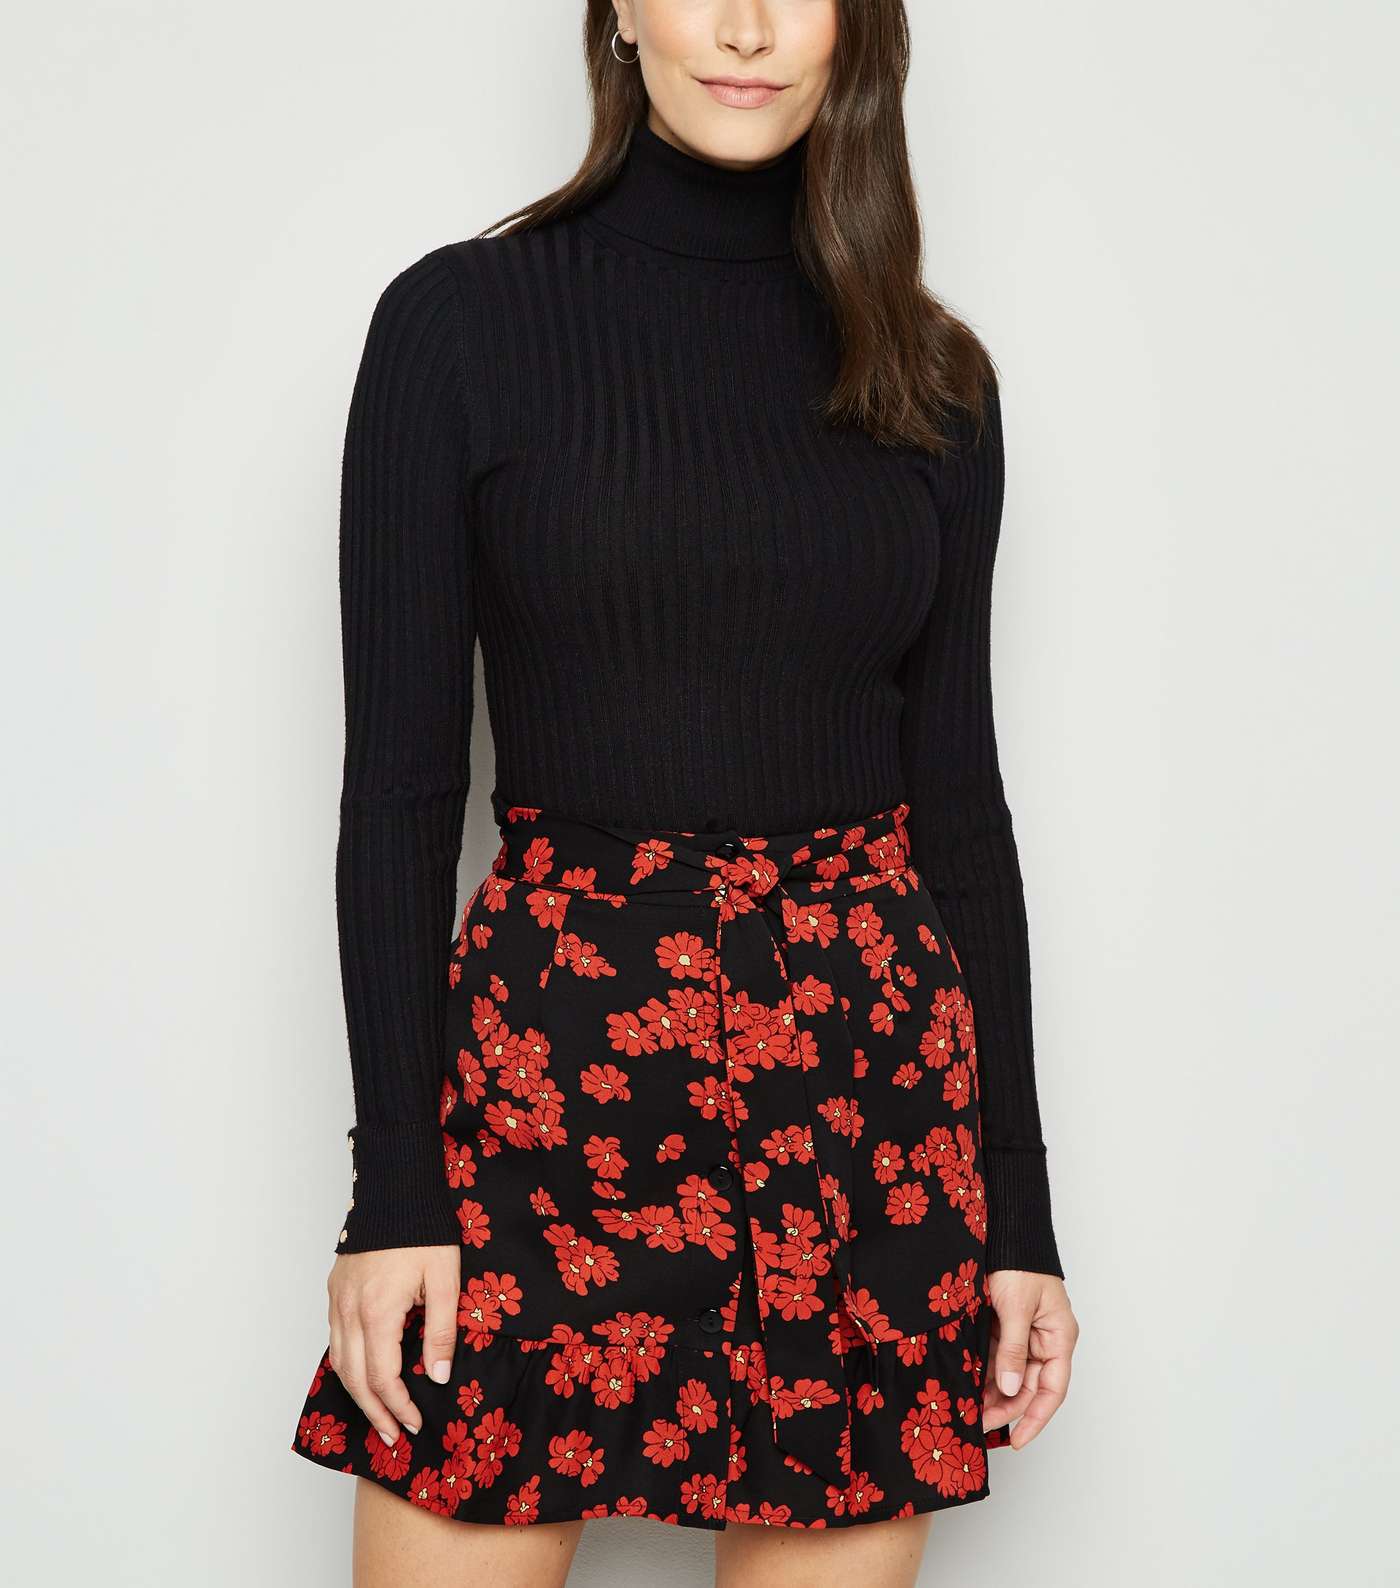 Urban Bliss Black Floral Frill Mini Skirt